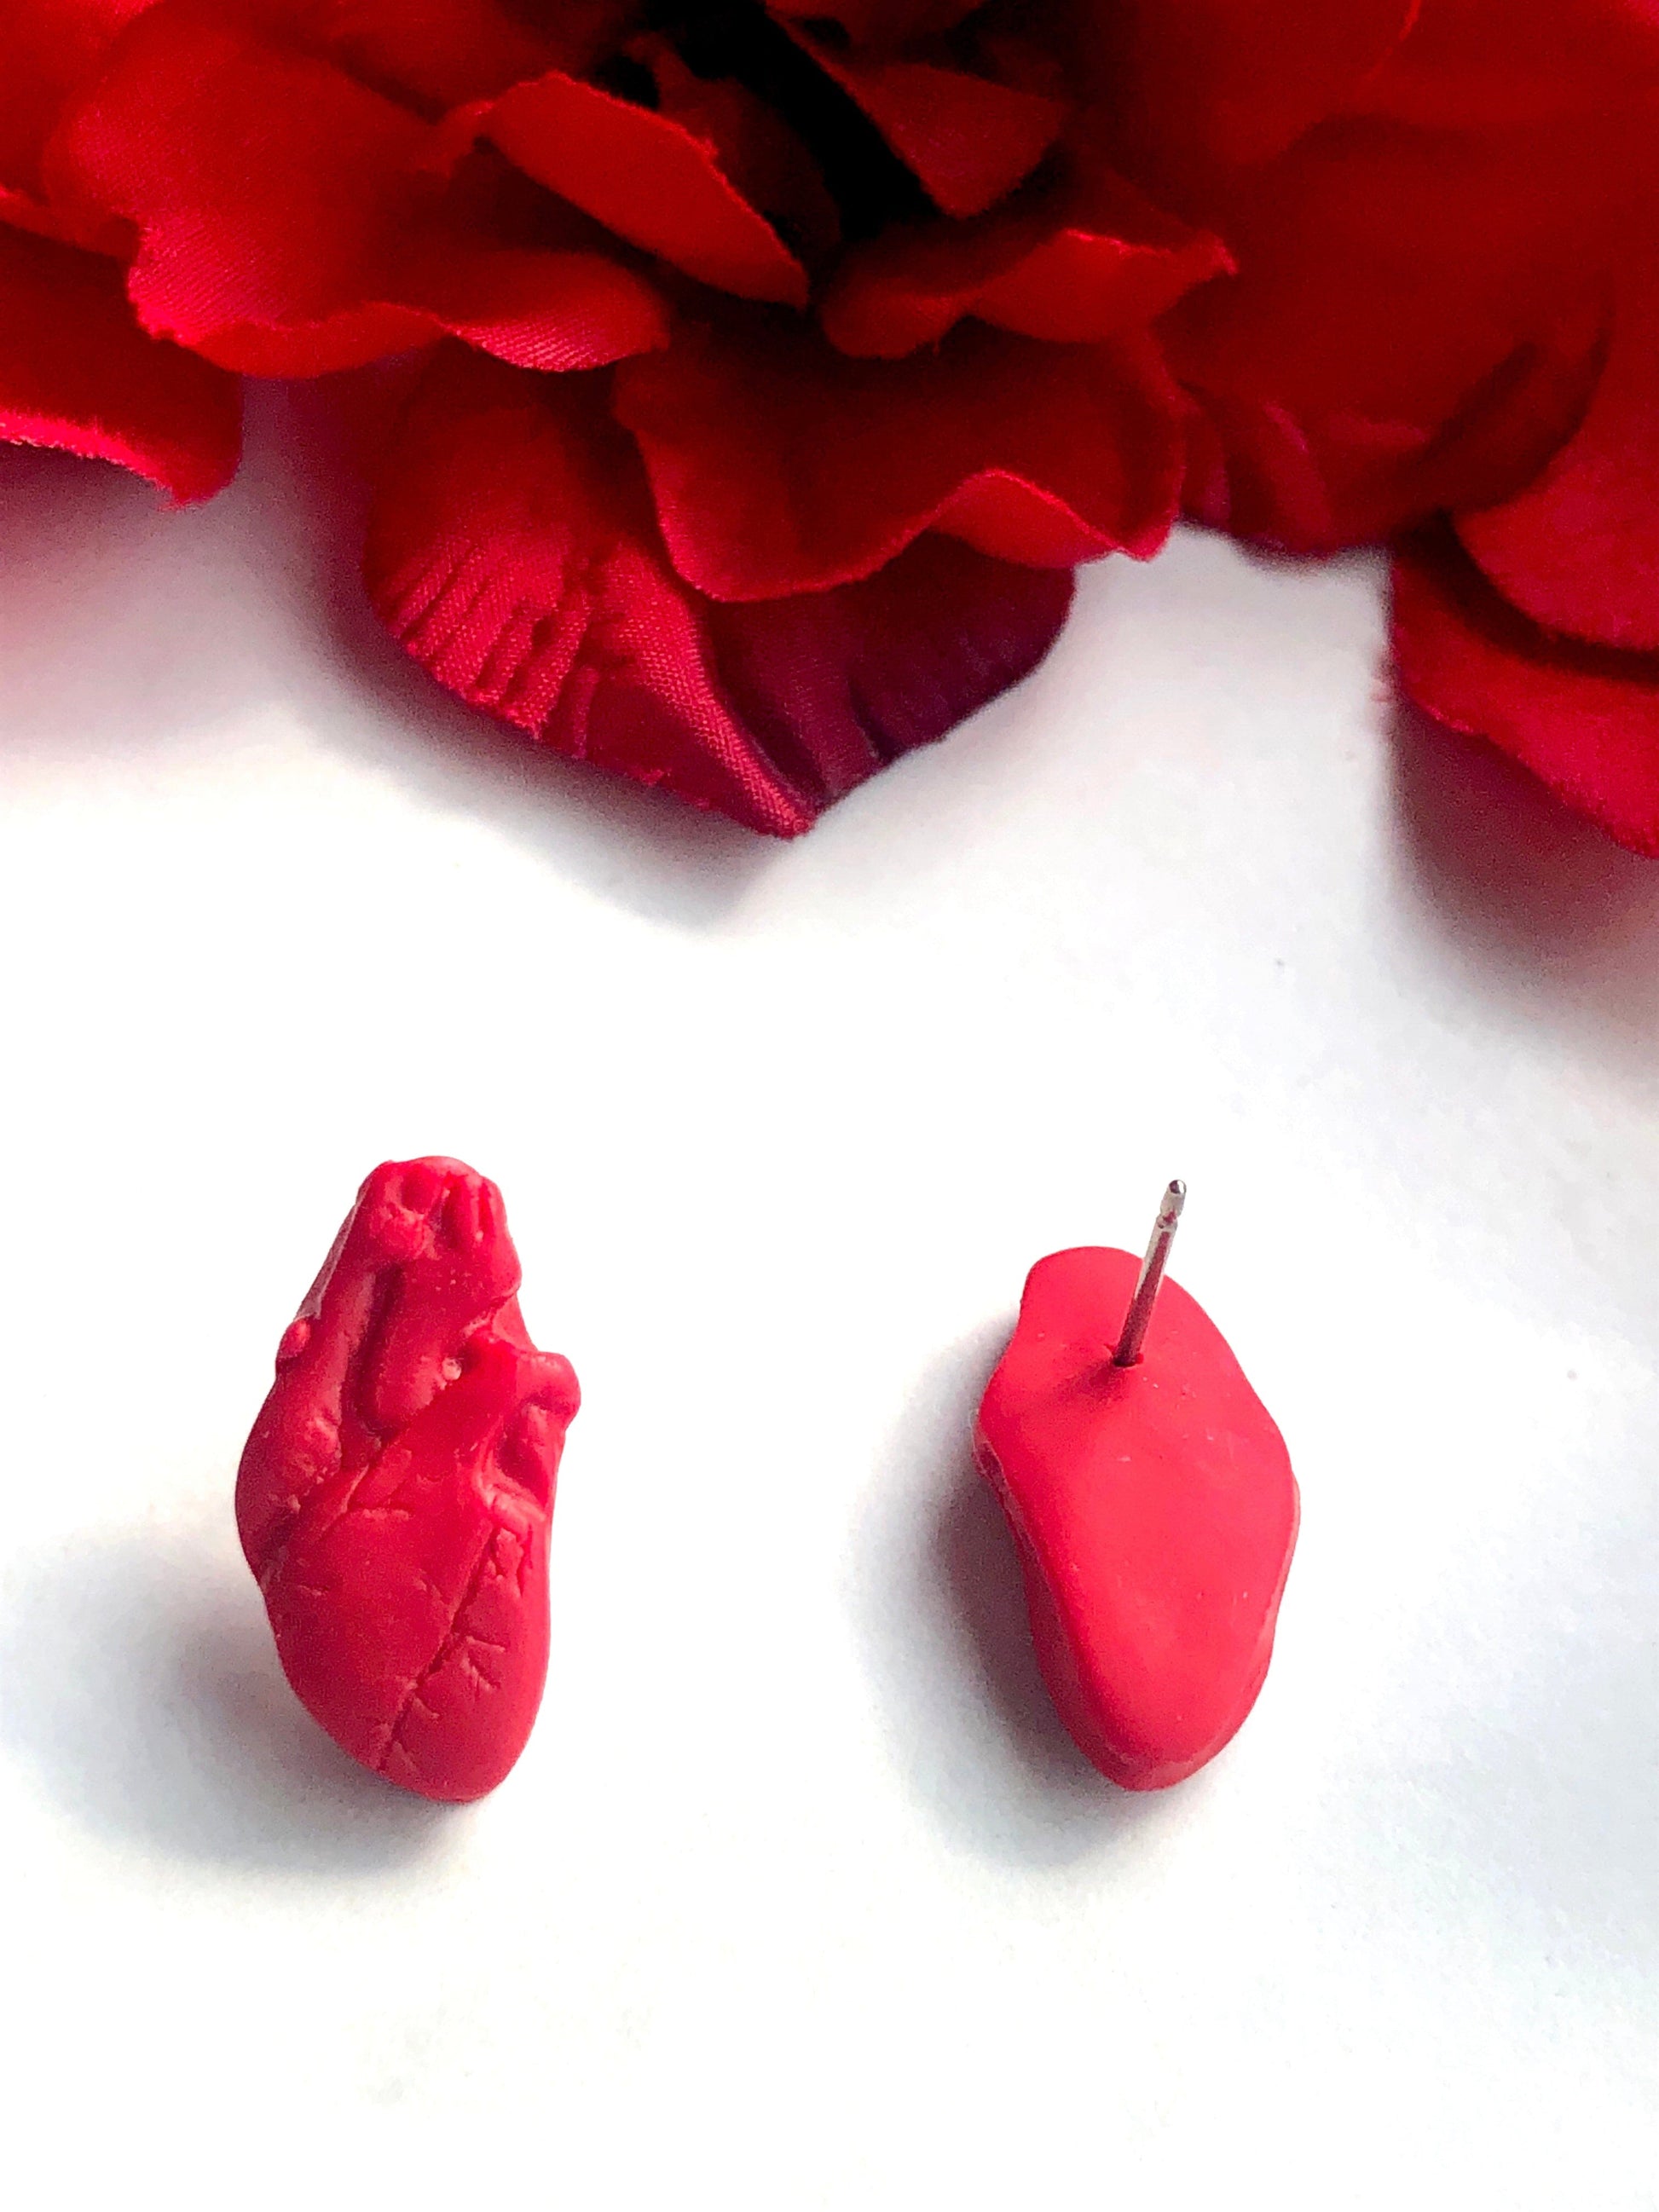 Earrings Anatomical Heart Stud Earrings Red Anatomical Heart Earrings, Polymer Clay Heart Earrings